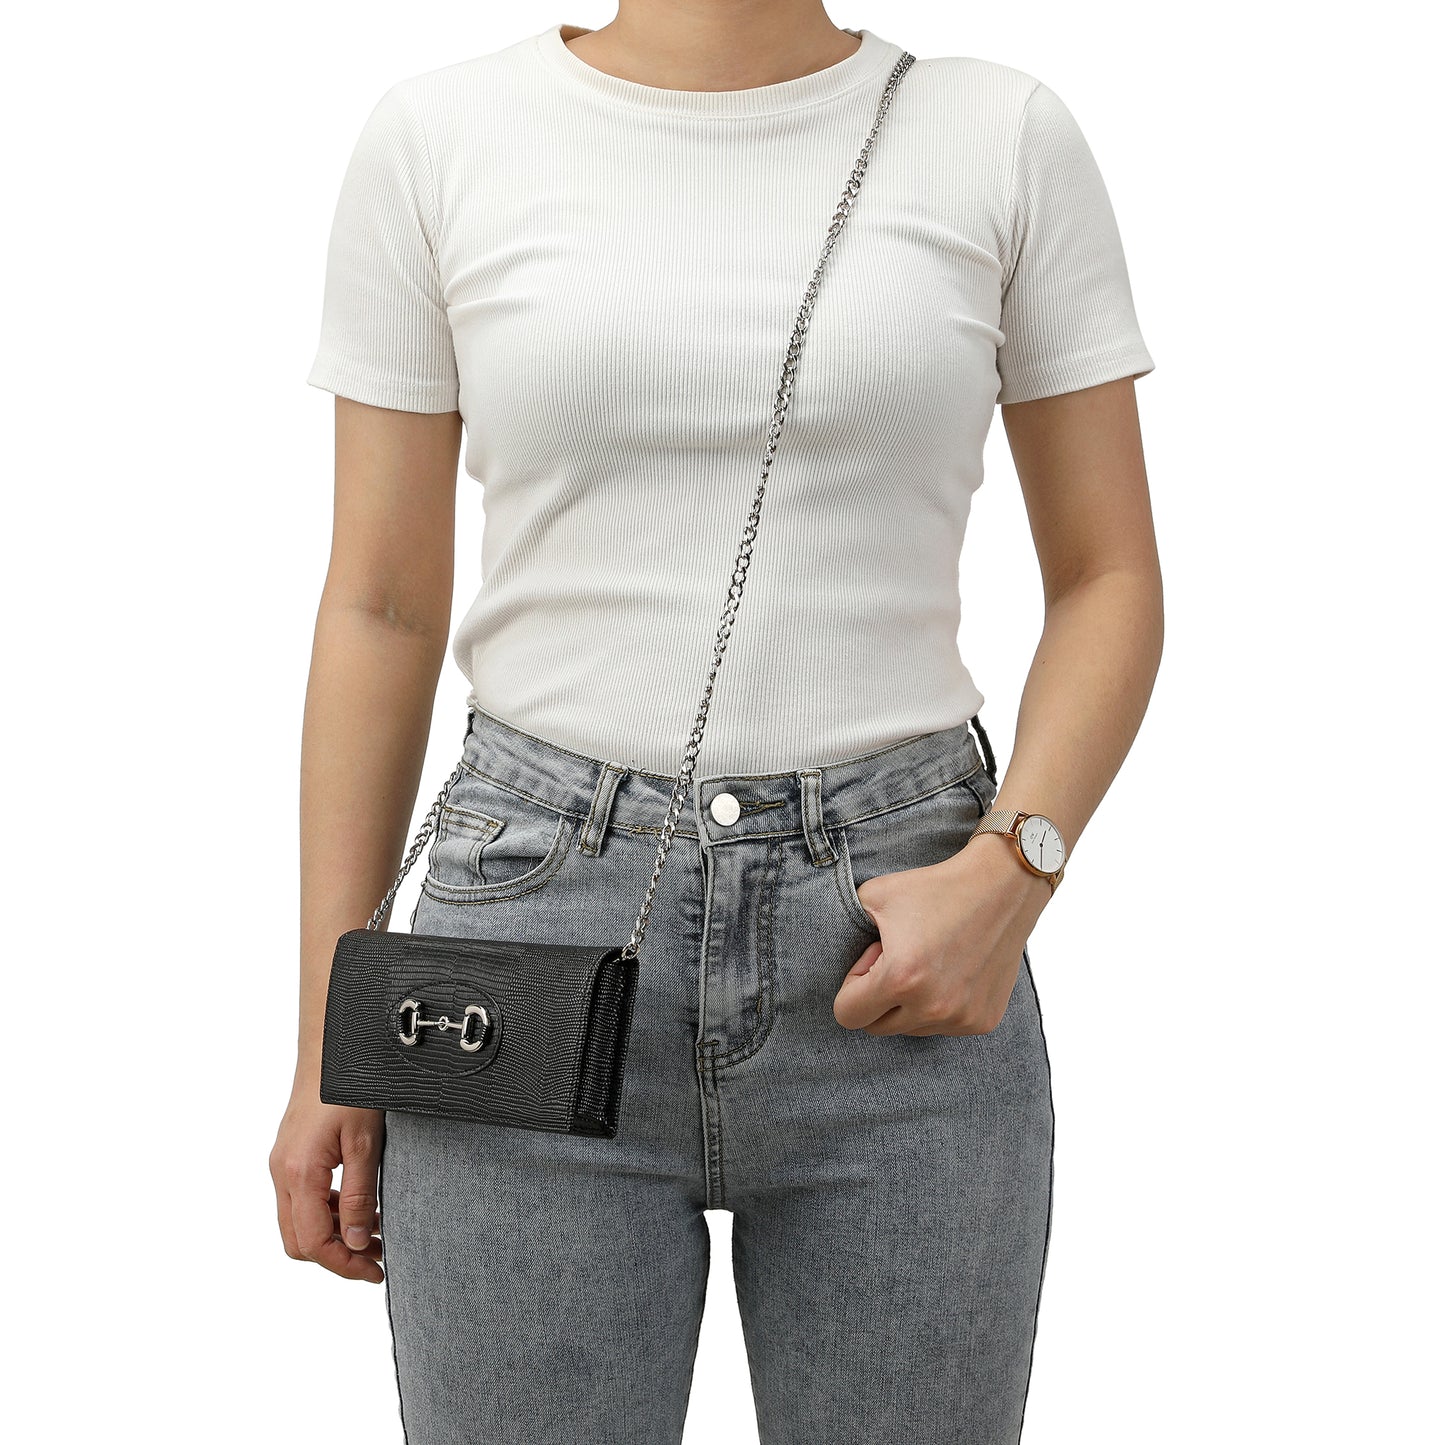 Tiffany & Fred Leather Clutch/ Shoulder Bag